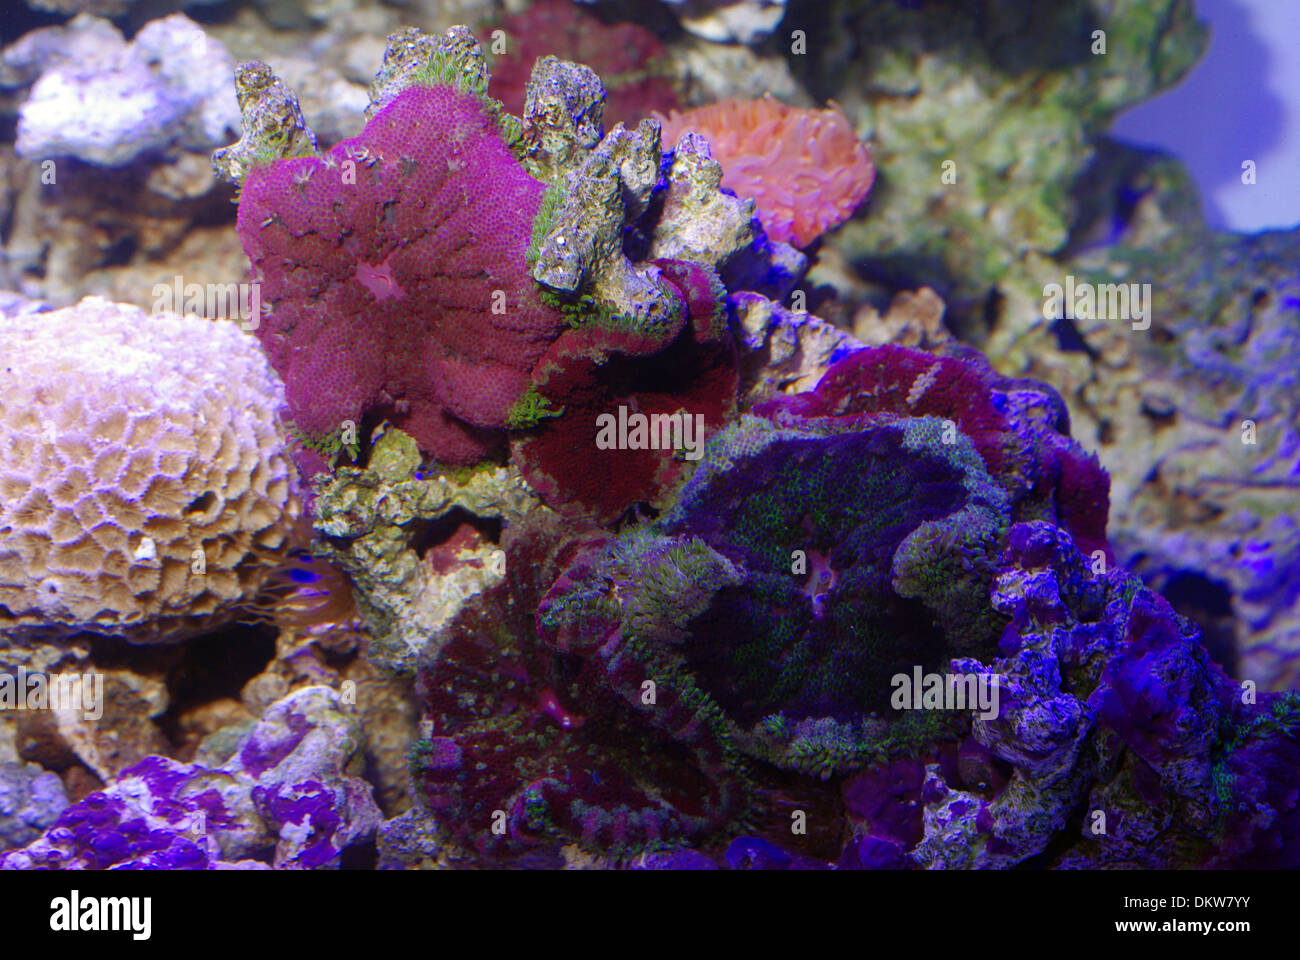 Mushroom coral polyps on rock (Actinodiscus sp. or Discosoma sp.) Stock Photo